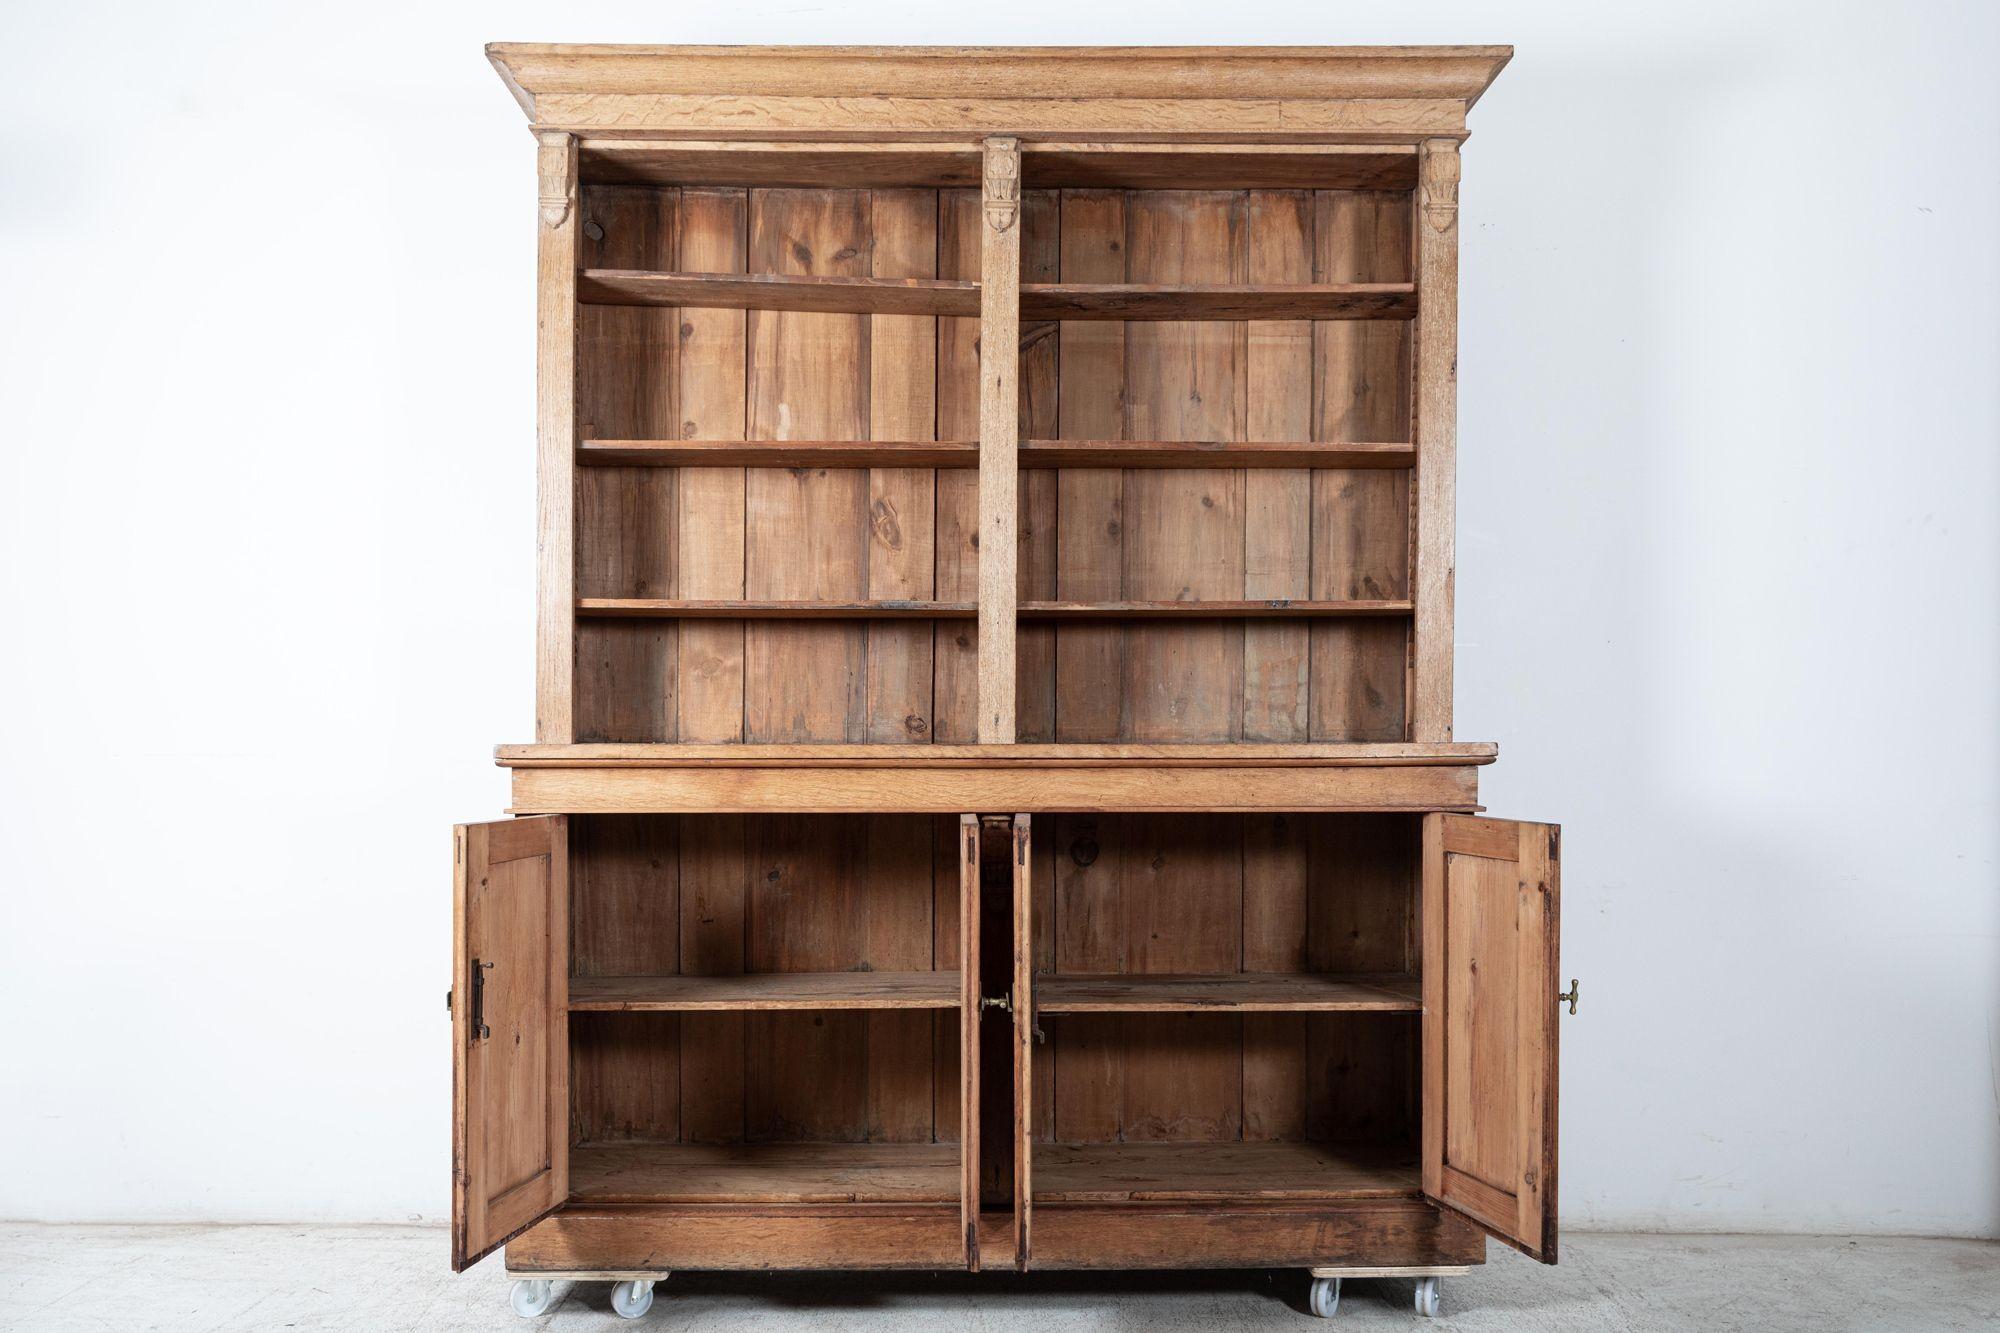 Circa 1870

19thC oak & pine open bookcase / dresser with original brass T bar handles and hardware.

(2 parts)

Measures: W 190 x D 47 x H 228 cm

Base W 181 x D 47 x H 96 cm
Top W 190 x D 36 x H 132 cm.

     